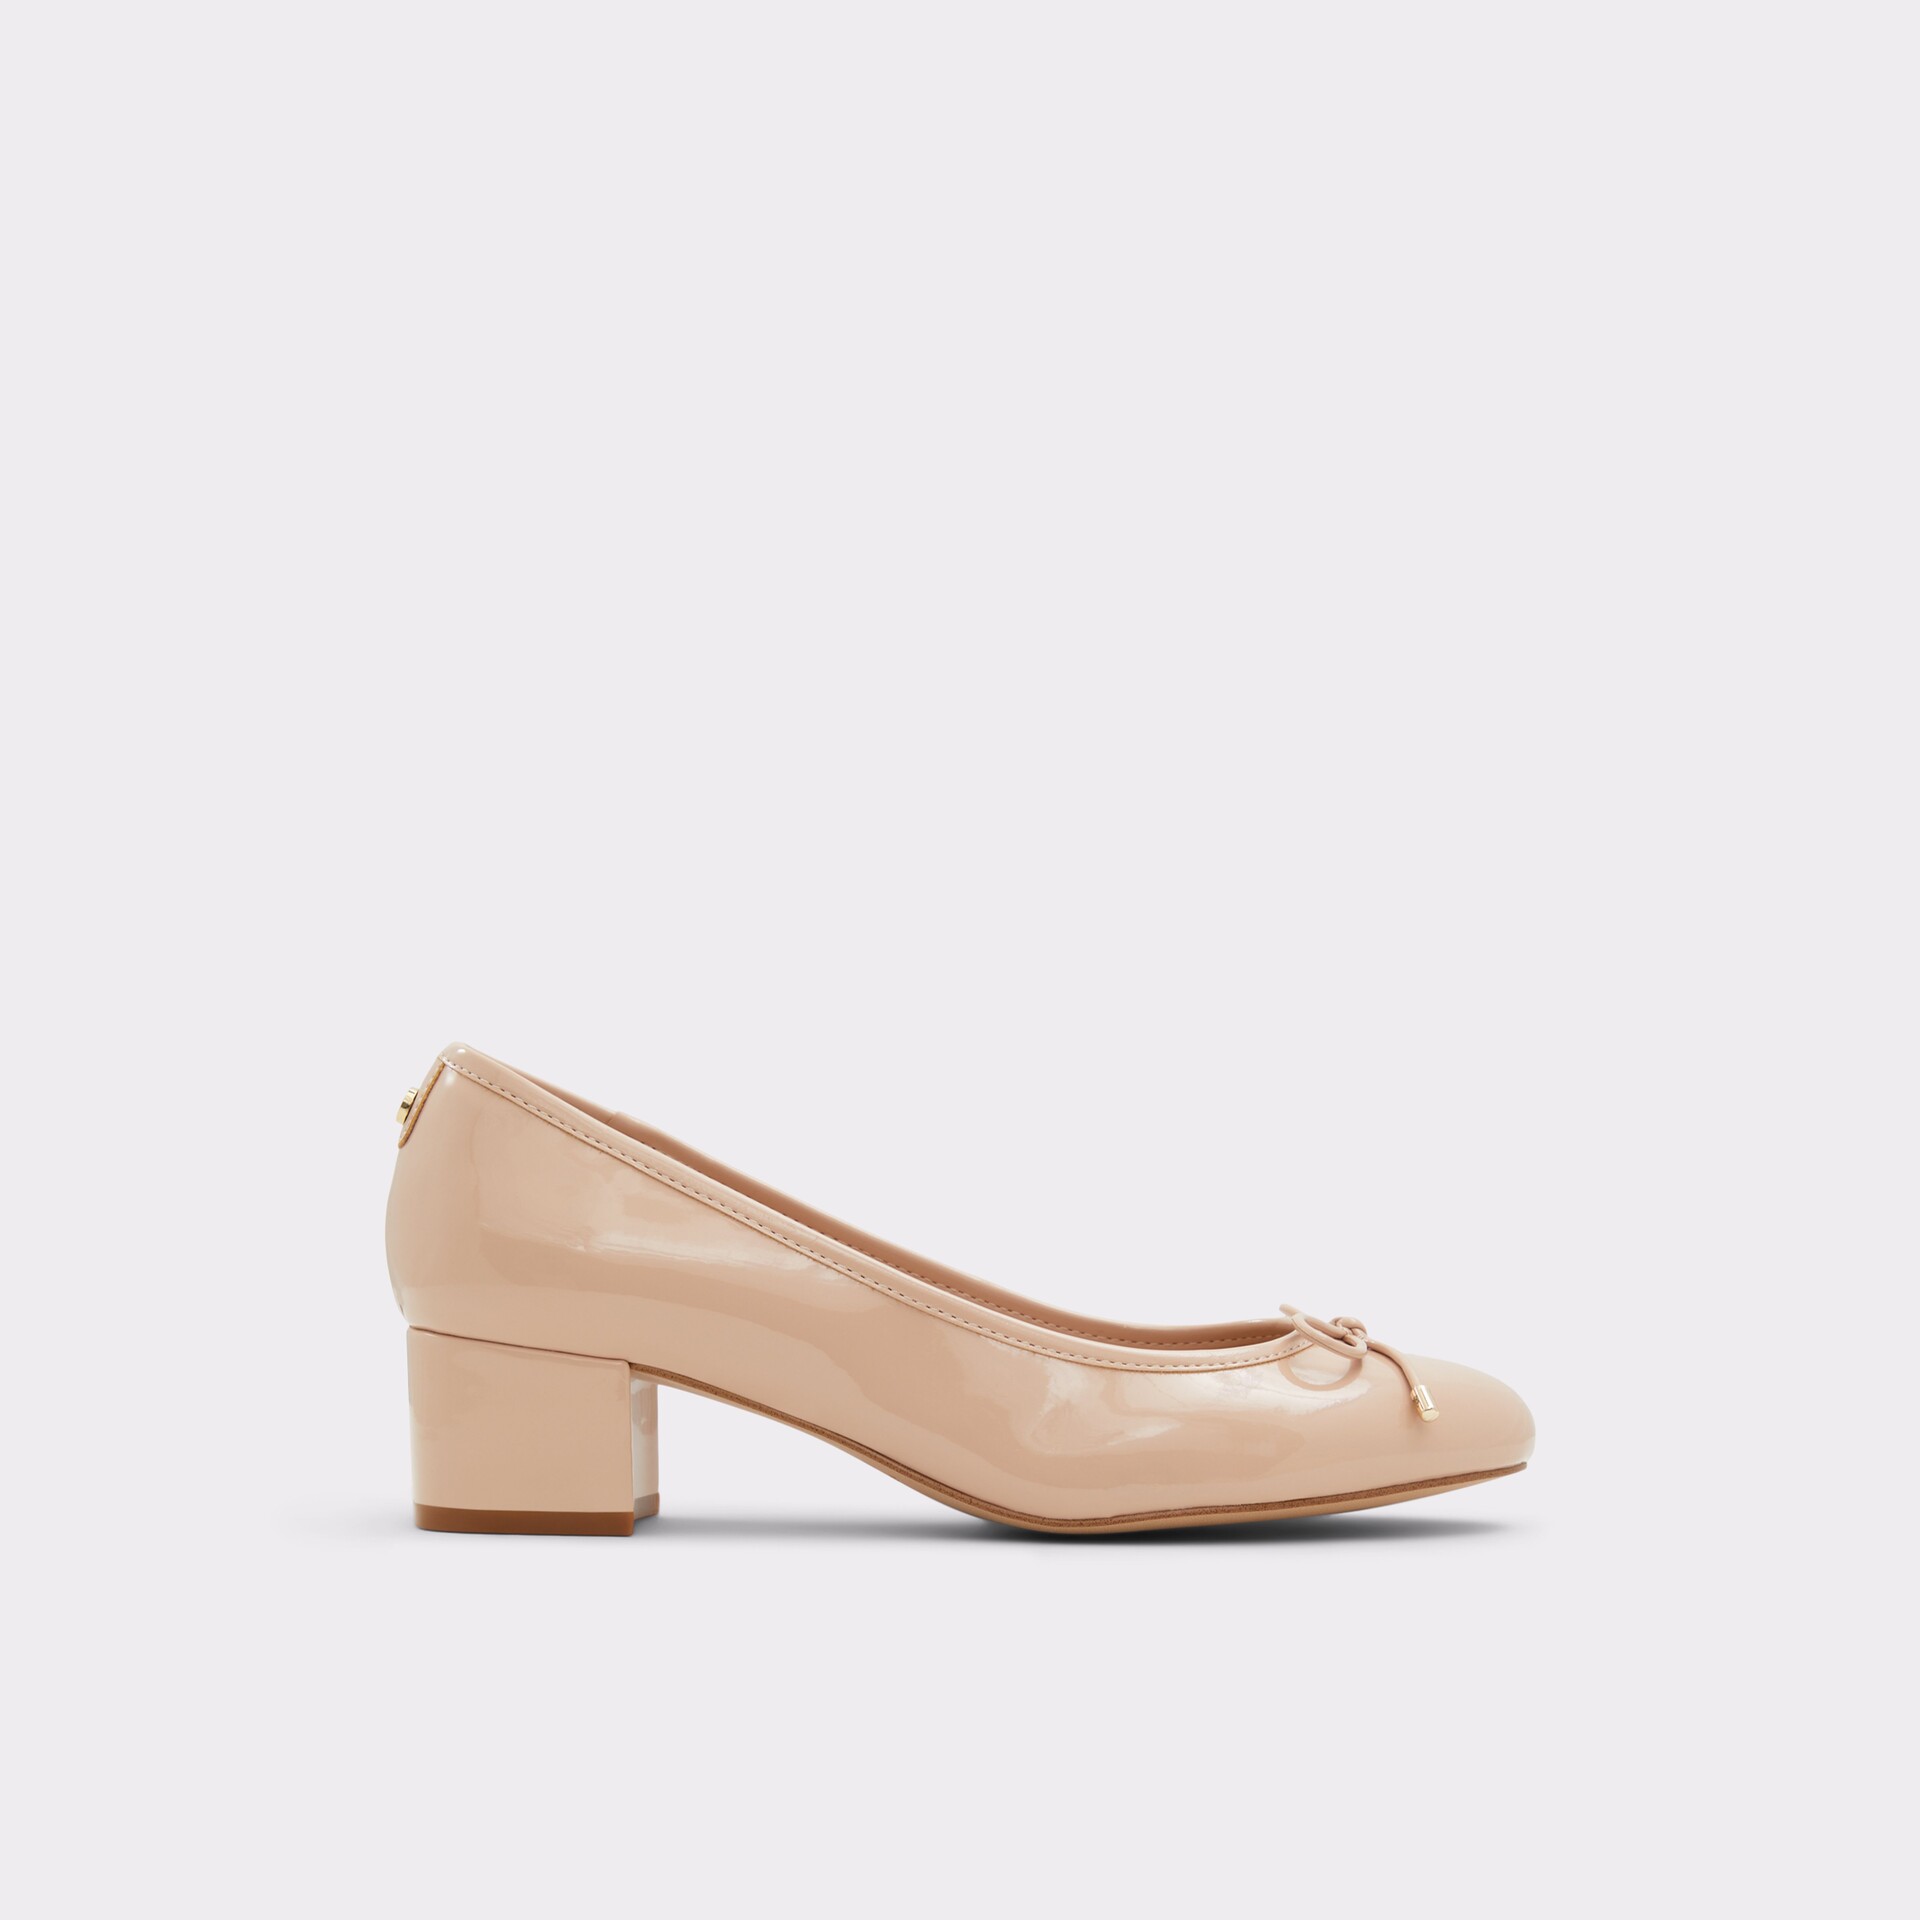 Woman shoes in beige patent, block heel - GARANDRA270002033 | ALDO Cyprus